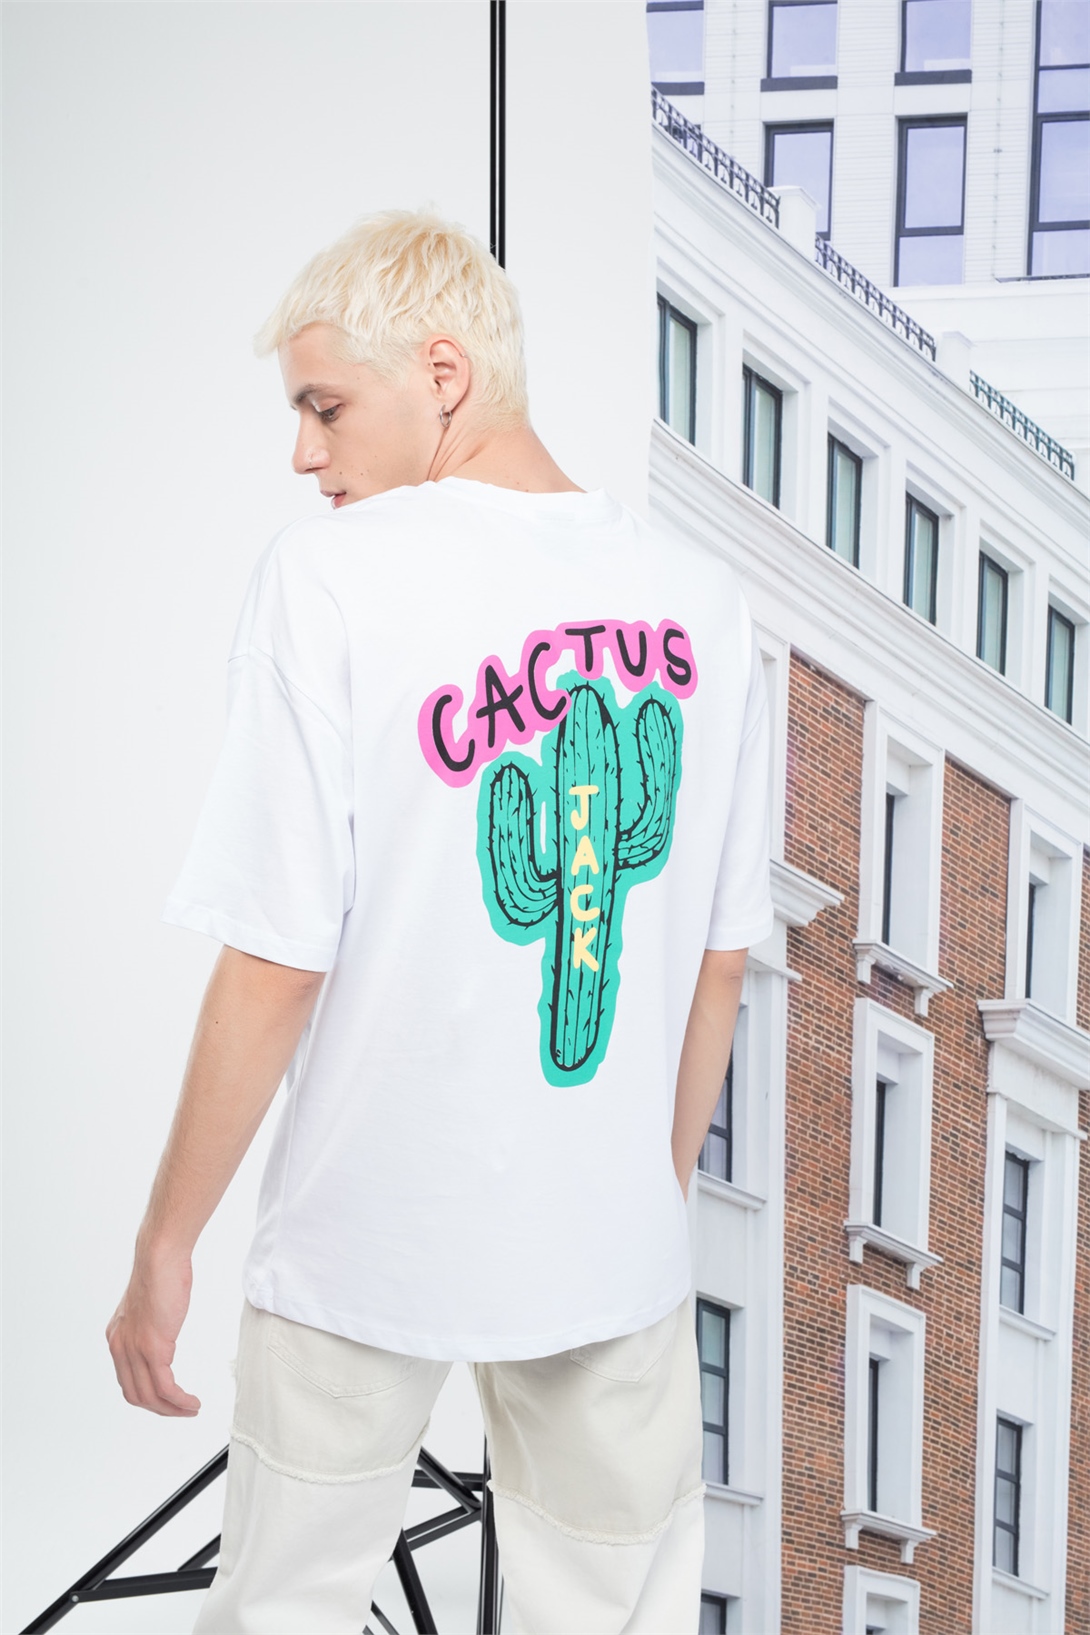 Trendiz Unisex Cactusjack Tshirt Beyaz